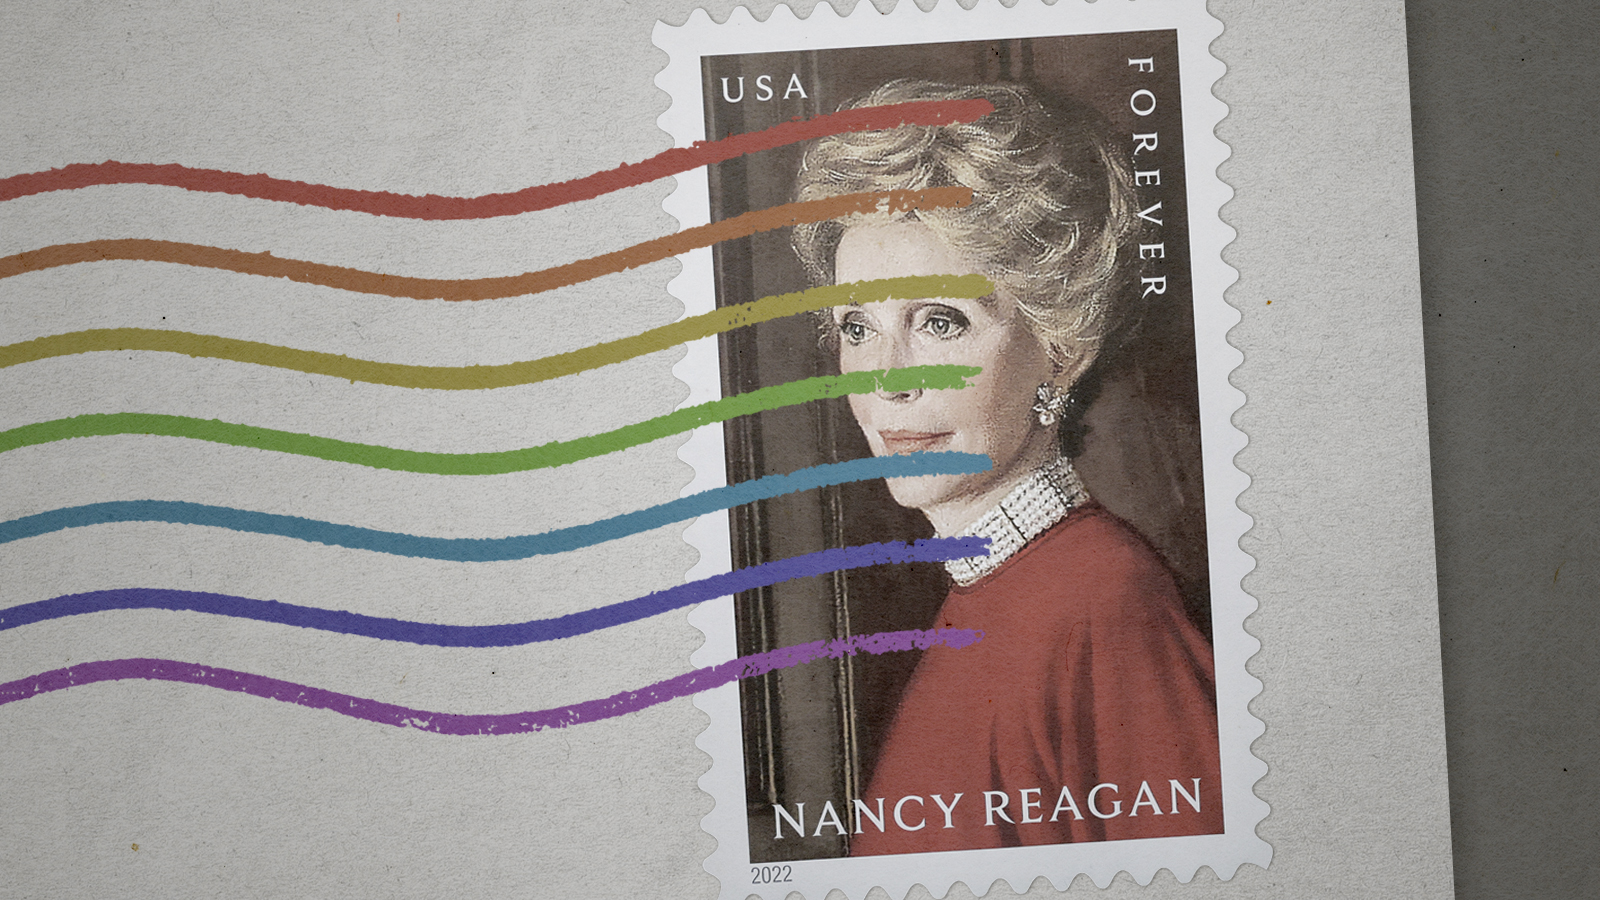 The Nancy Reagan stamp.